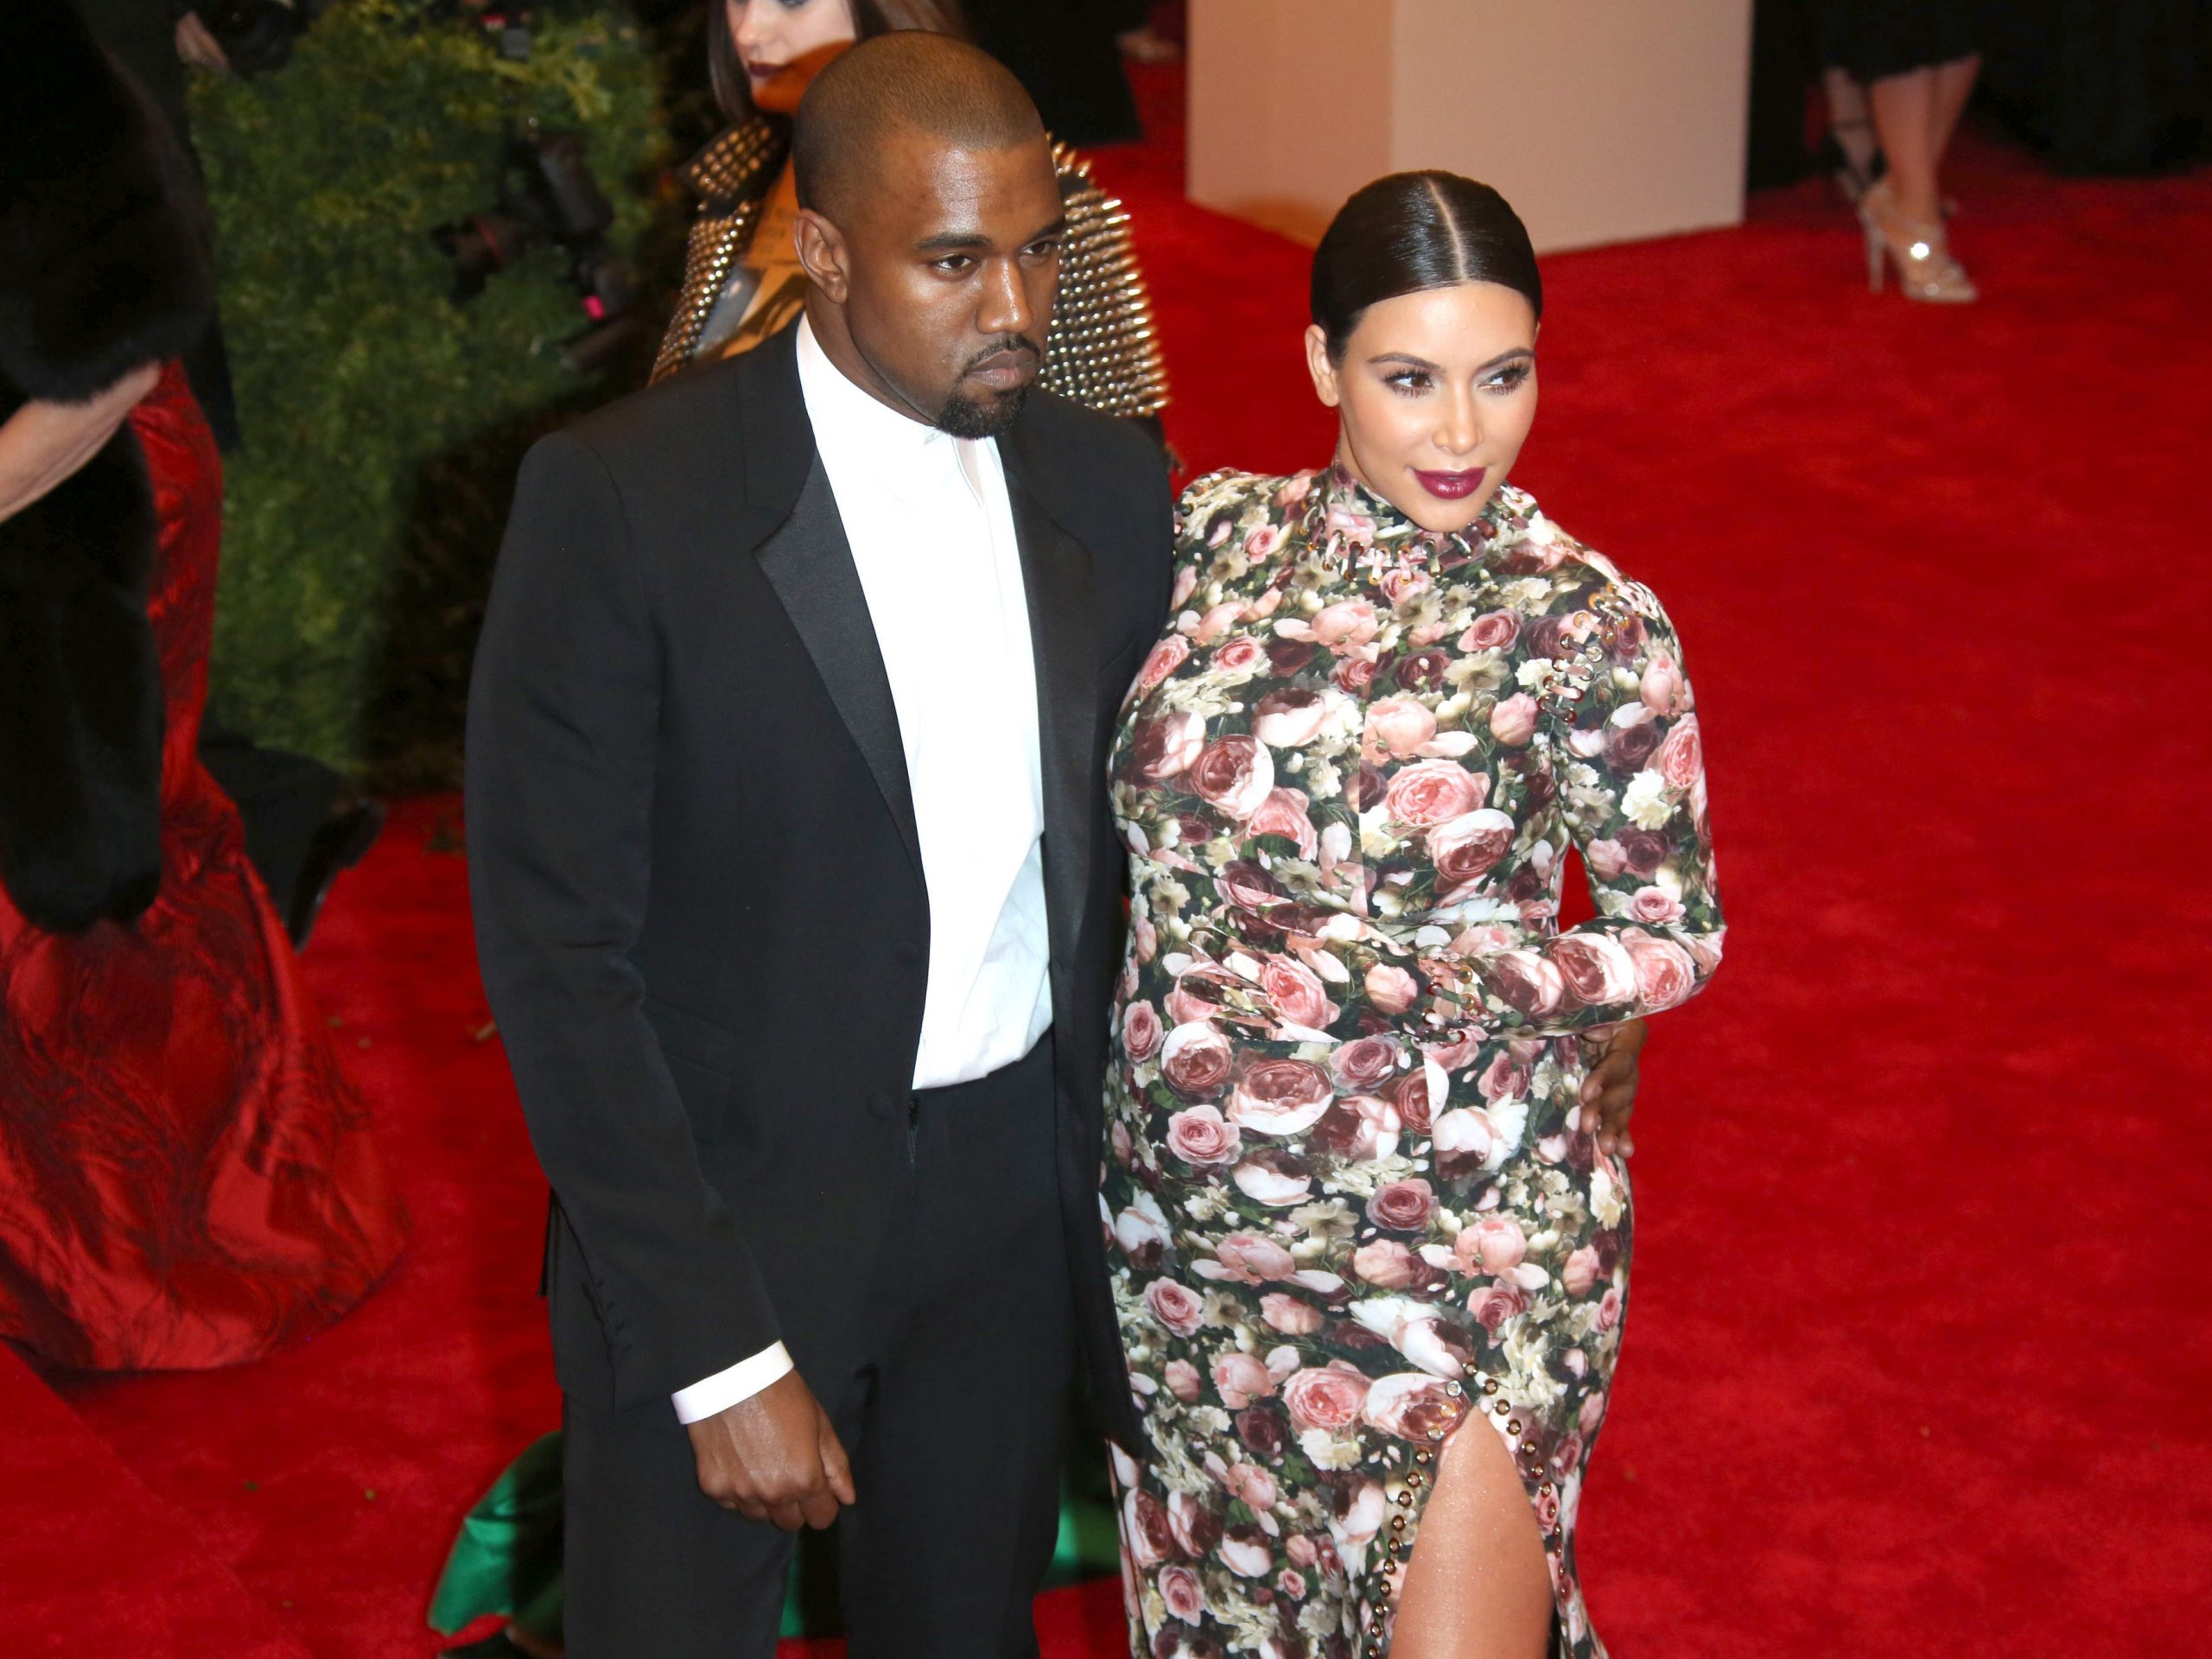 Kim Kardashian attended the 2013 Met Gala while pregnant alongside husband Kanye West.